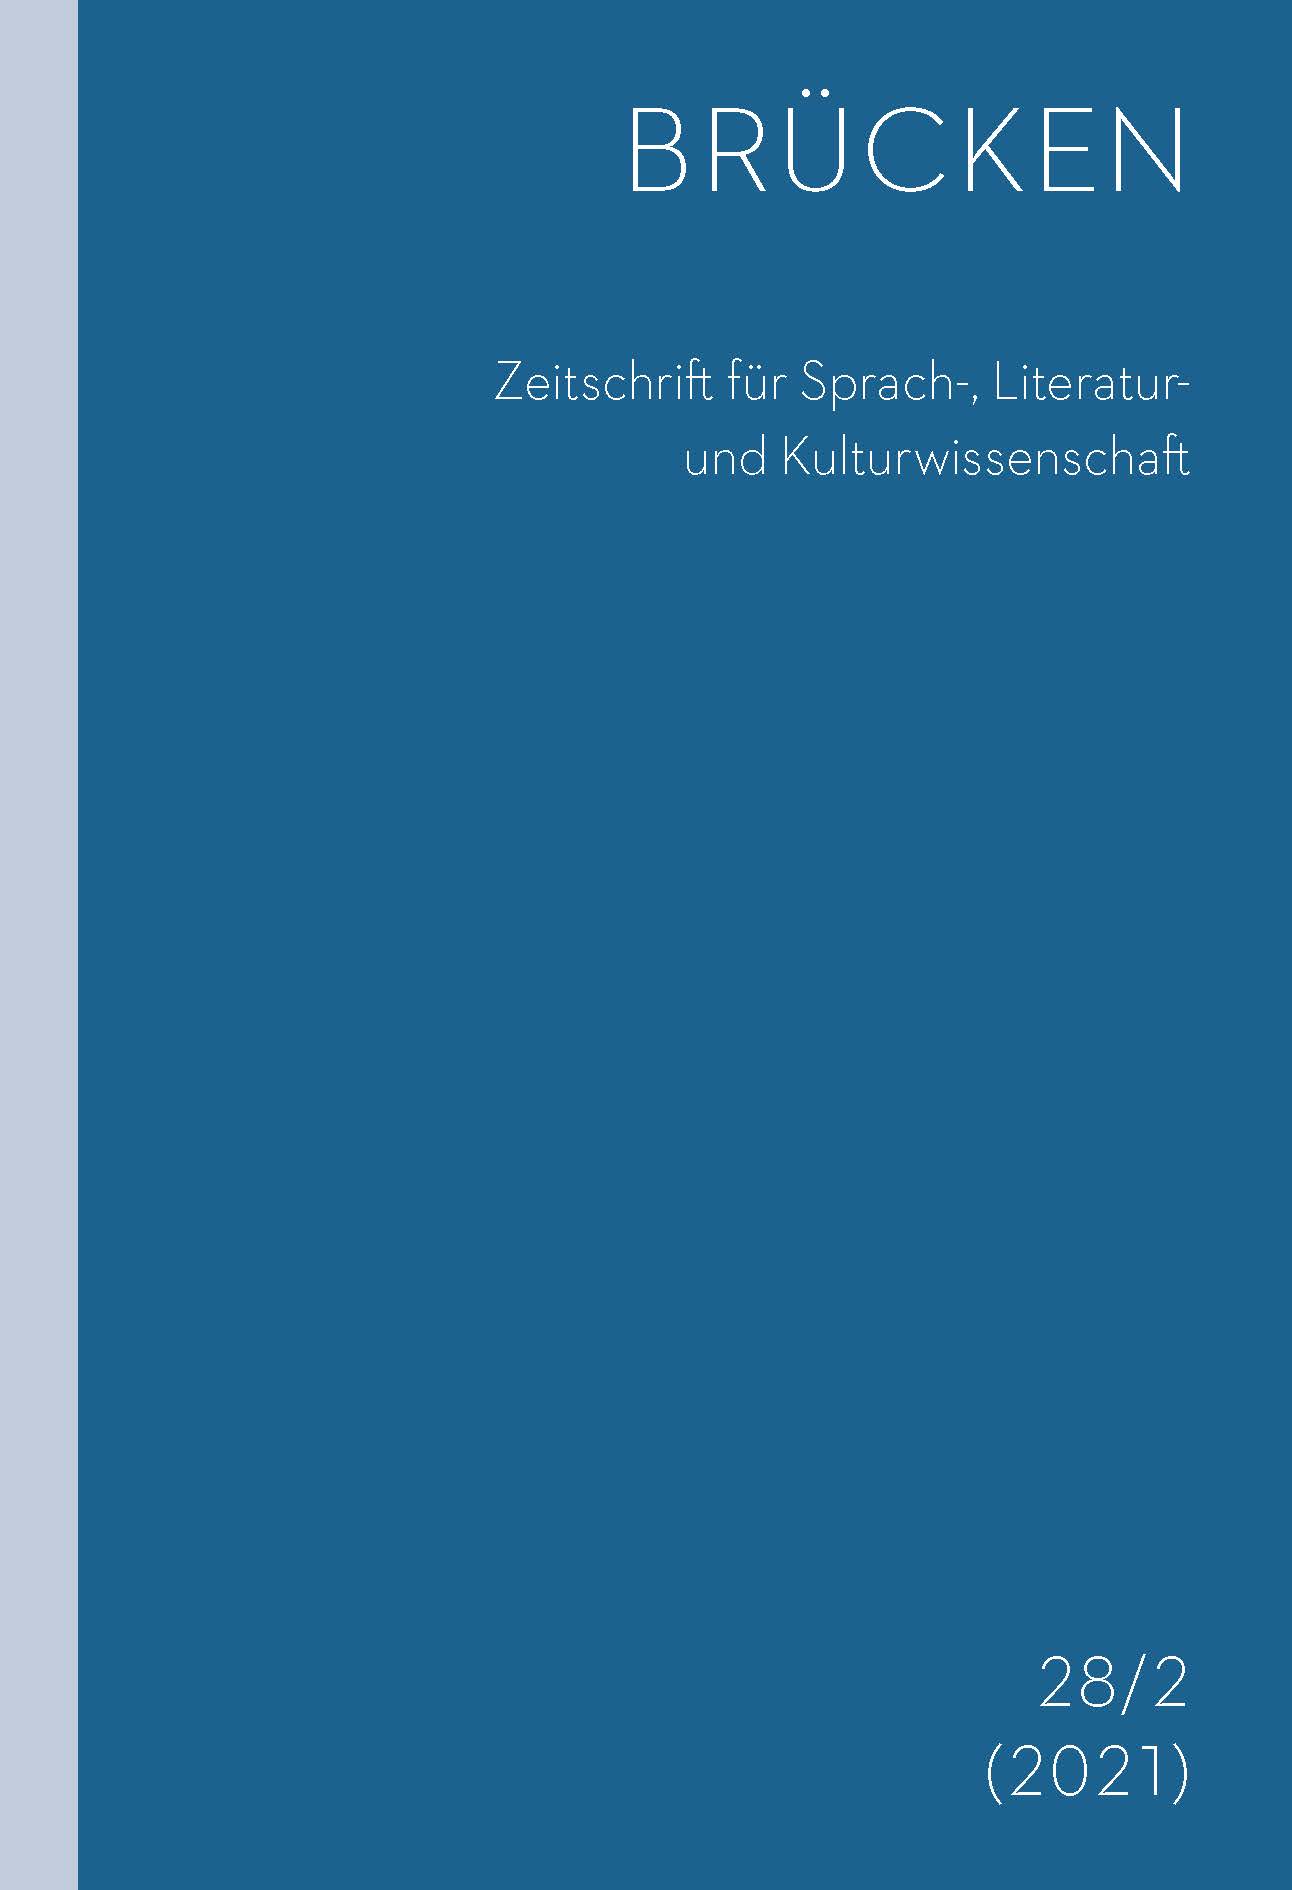 "Jewish Literature in German Costume?" Cover Image